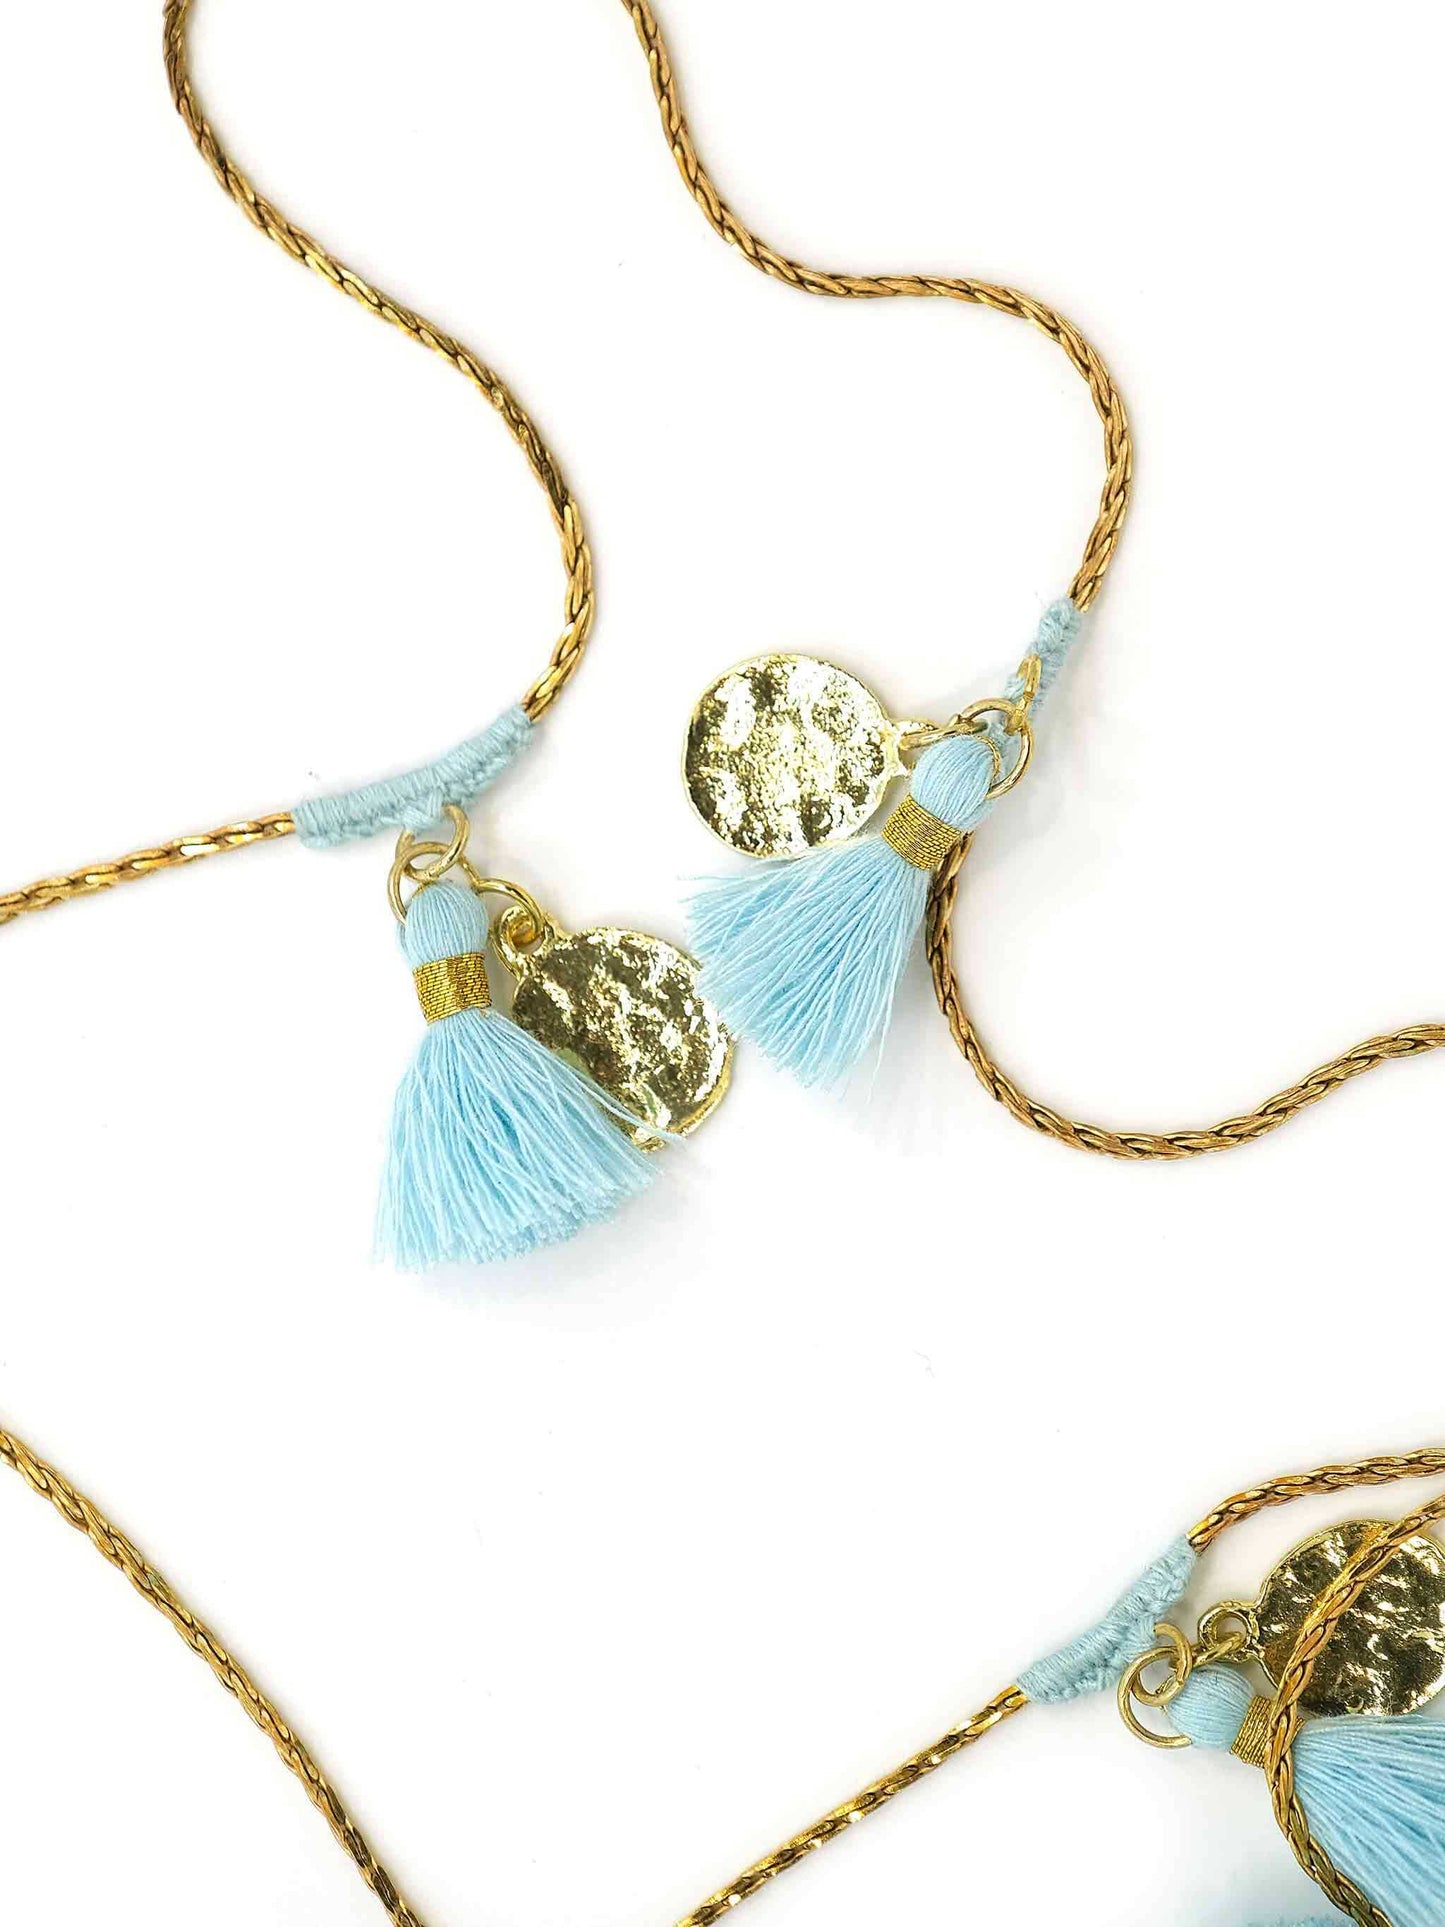 Boho Glam Forever Fringe Long Gold Necklace with Candy Blue Tassels